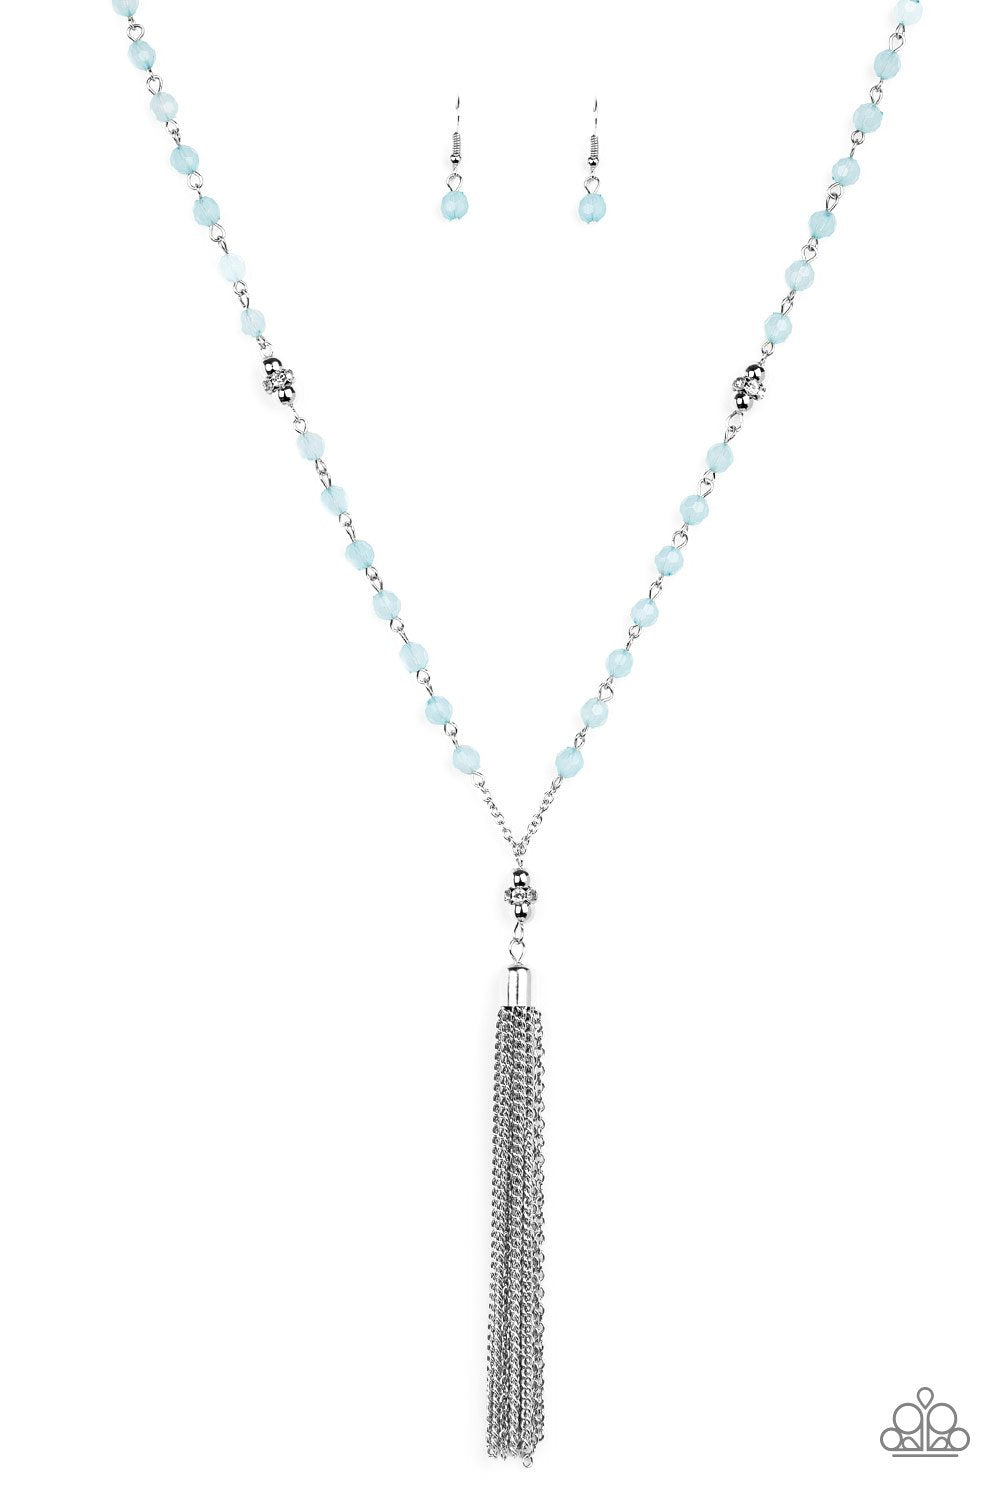 Tassel Takeover - Blue Necklace freeshipping - JewLz4u Gemstone Gallery